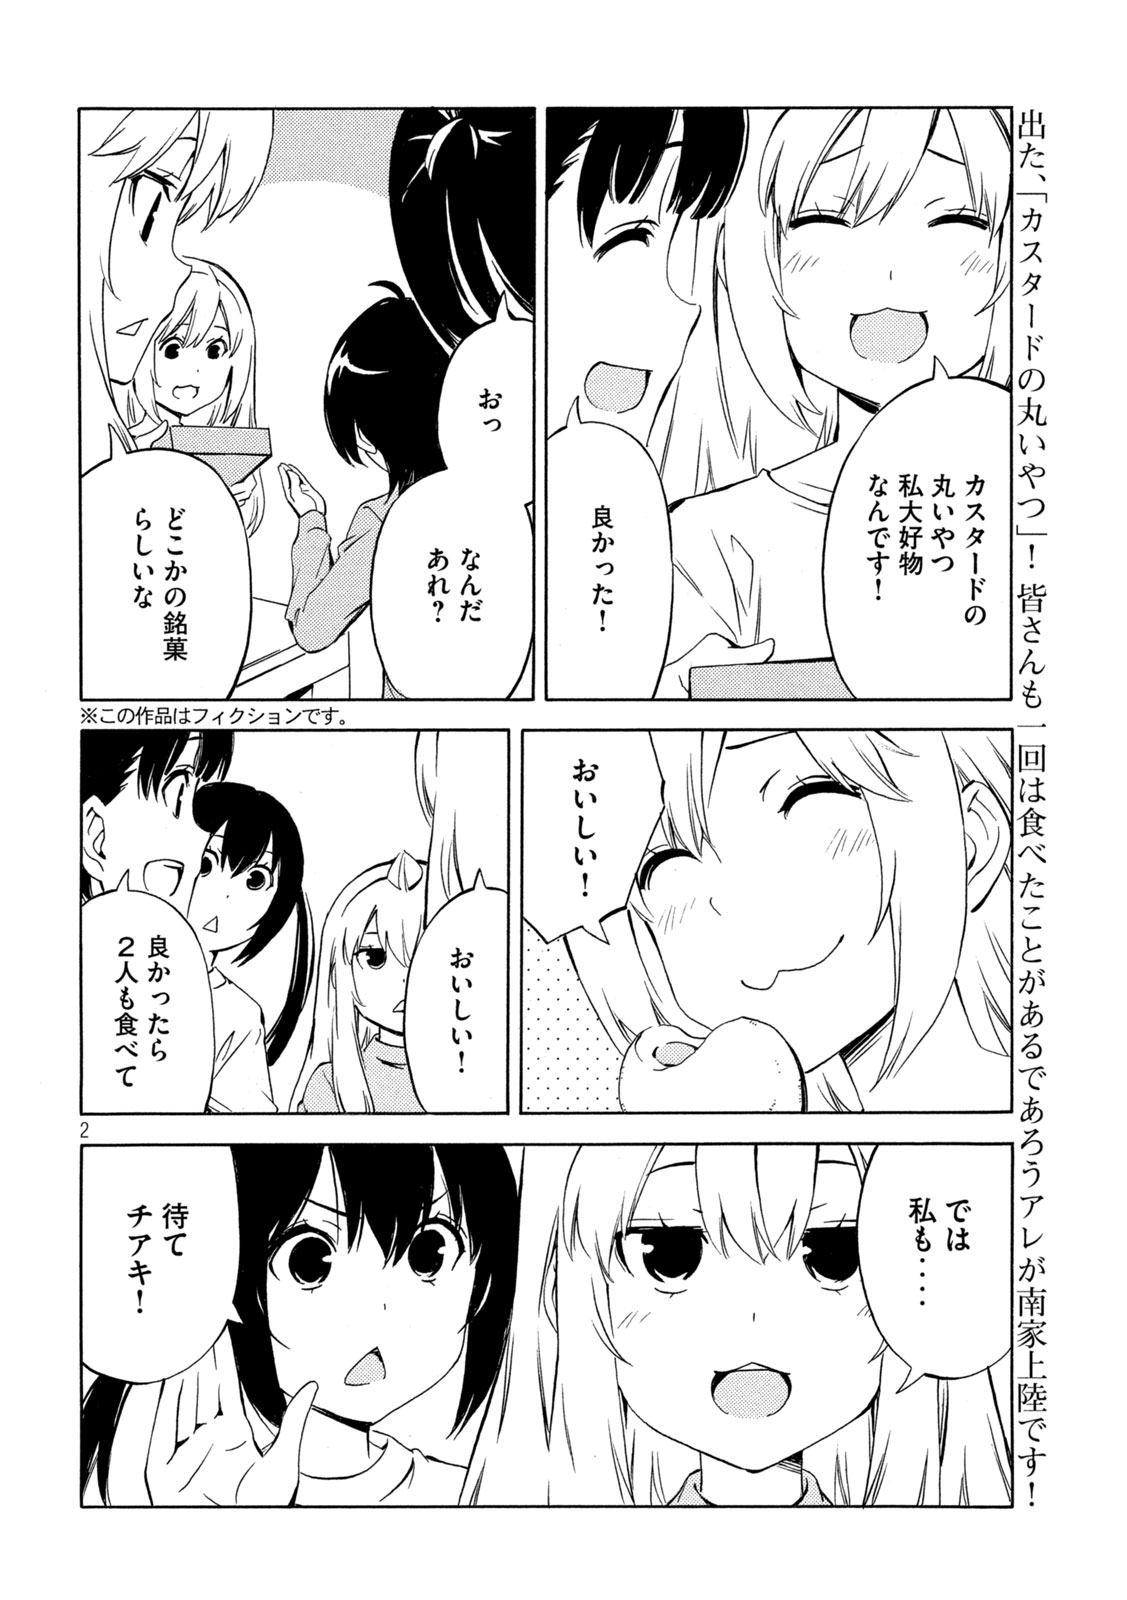 Minami-ke - Chapter 486 - Page 2